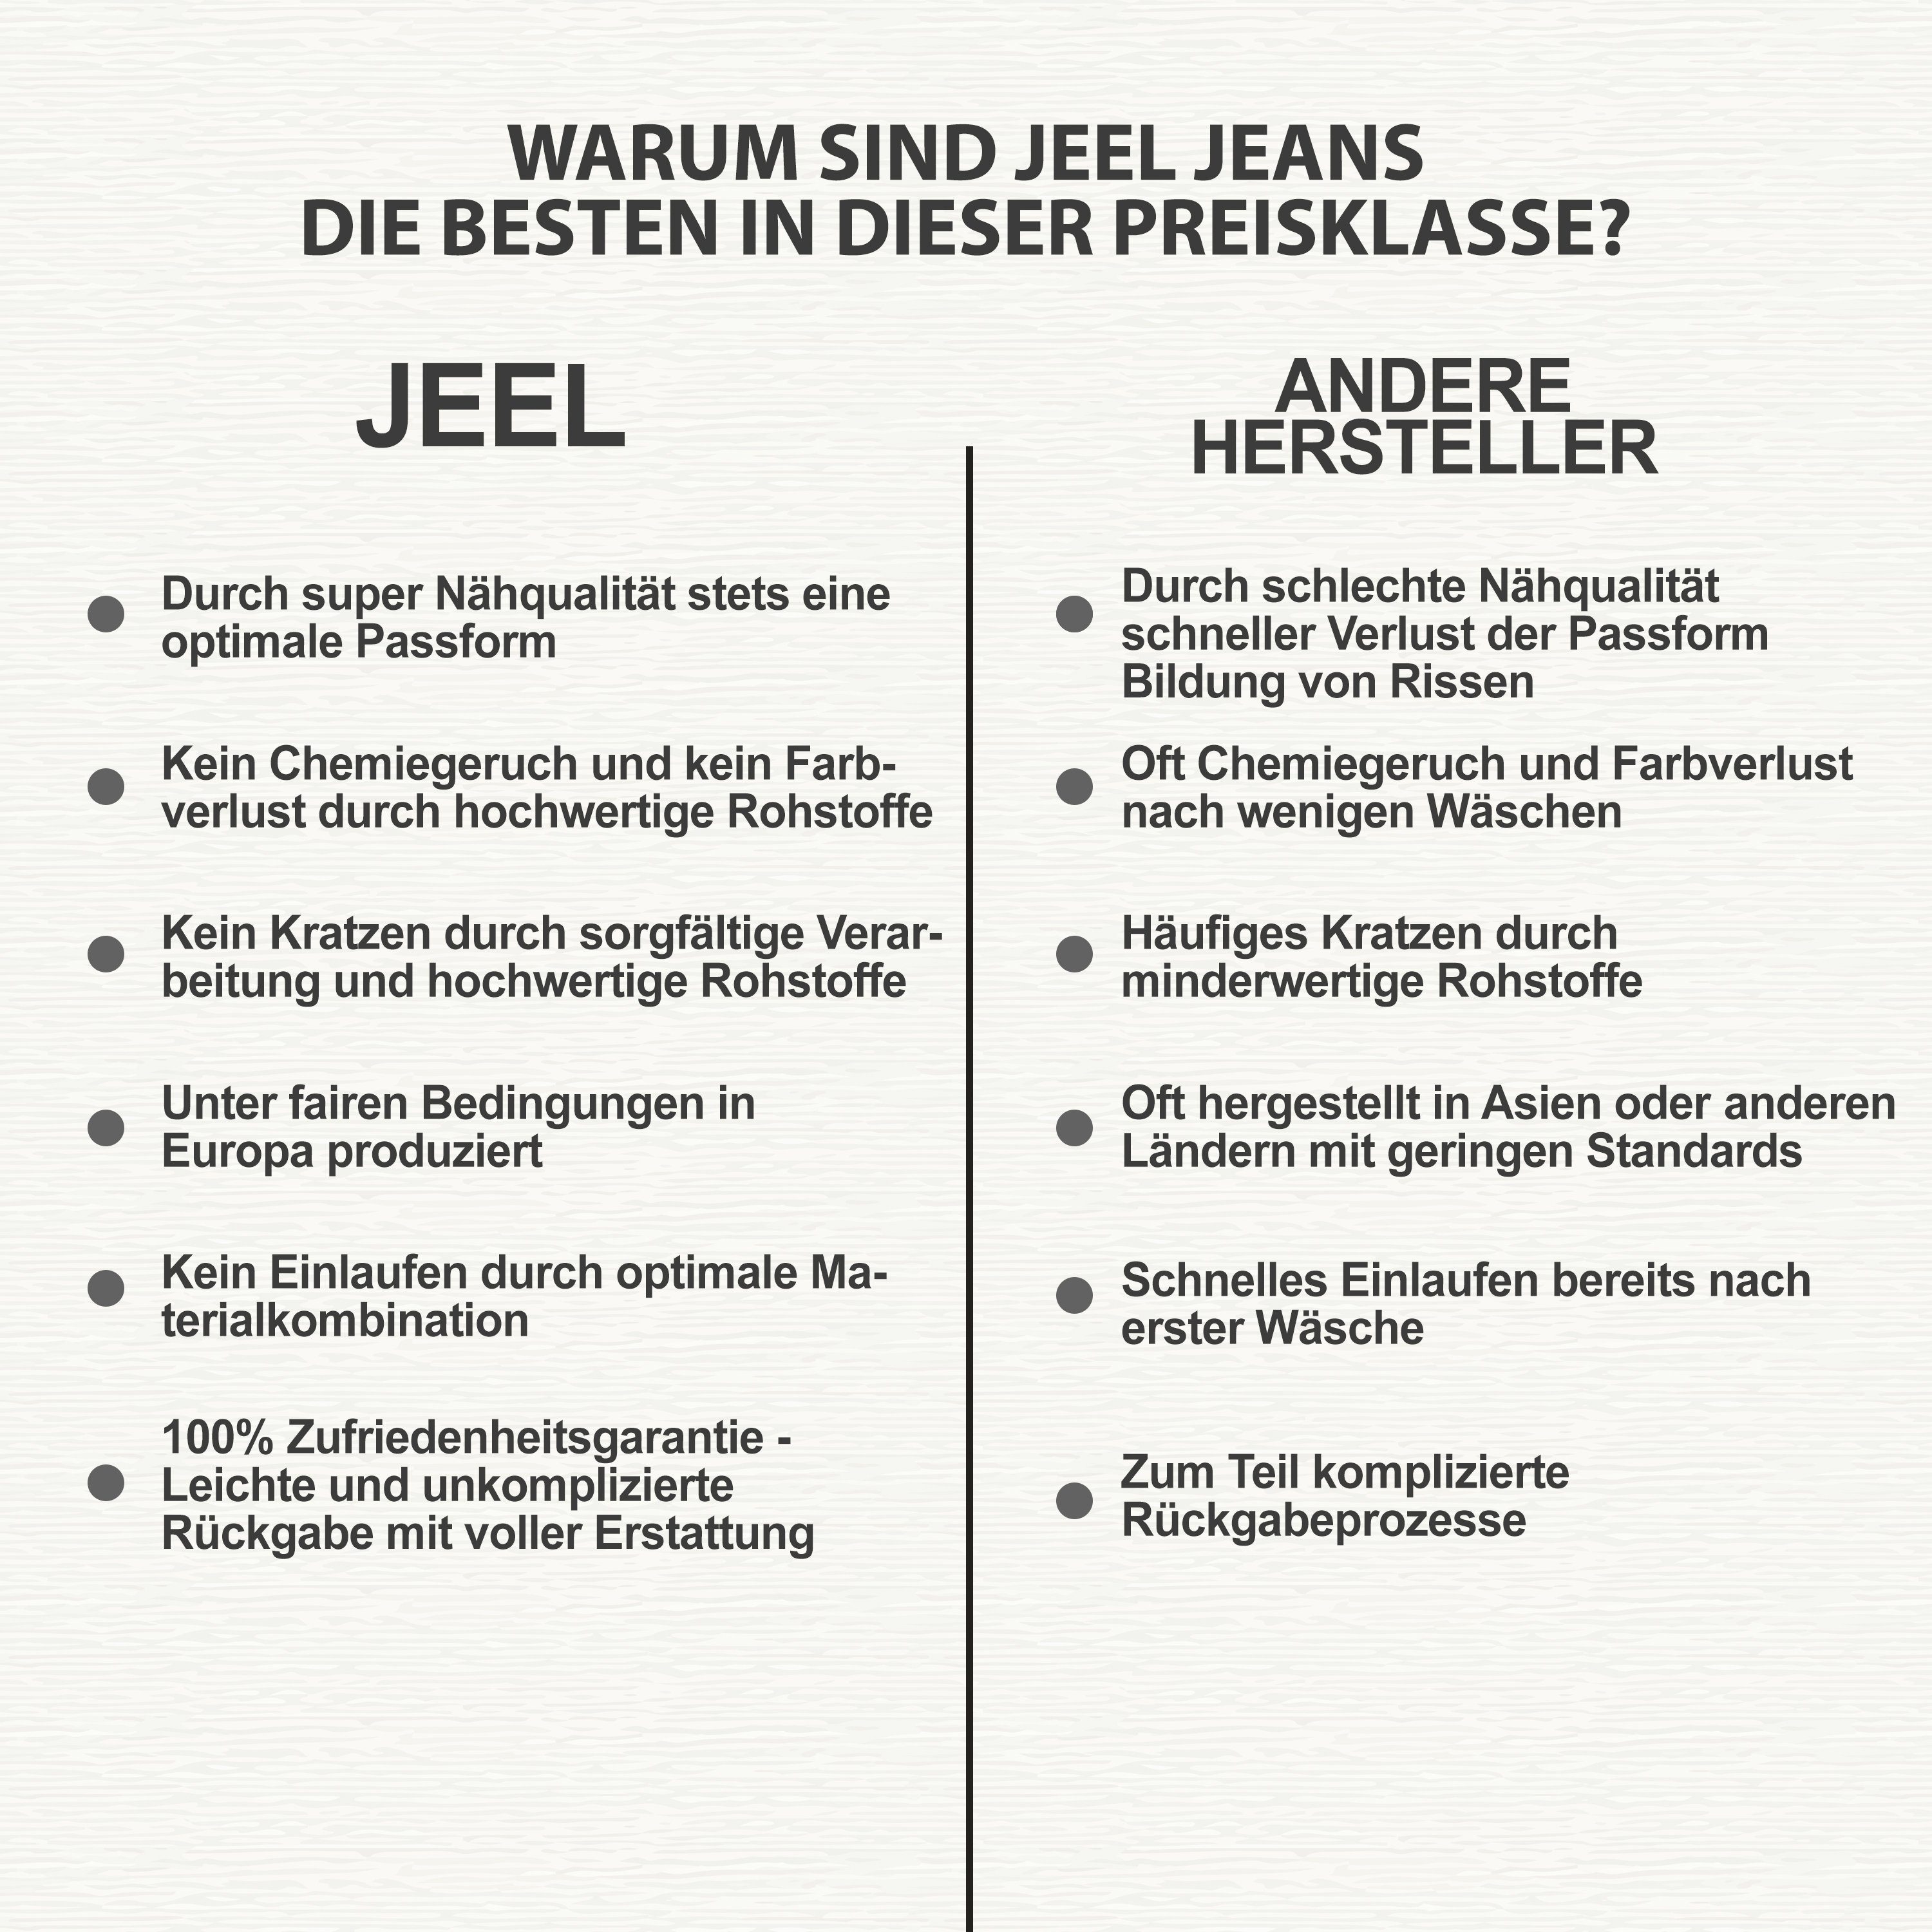 Straight Regular-fit-Jeans Herren Design JEEL Cut 02-Hellblau 305 5-Pocket Jeans